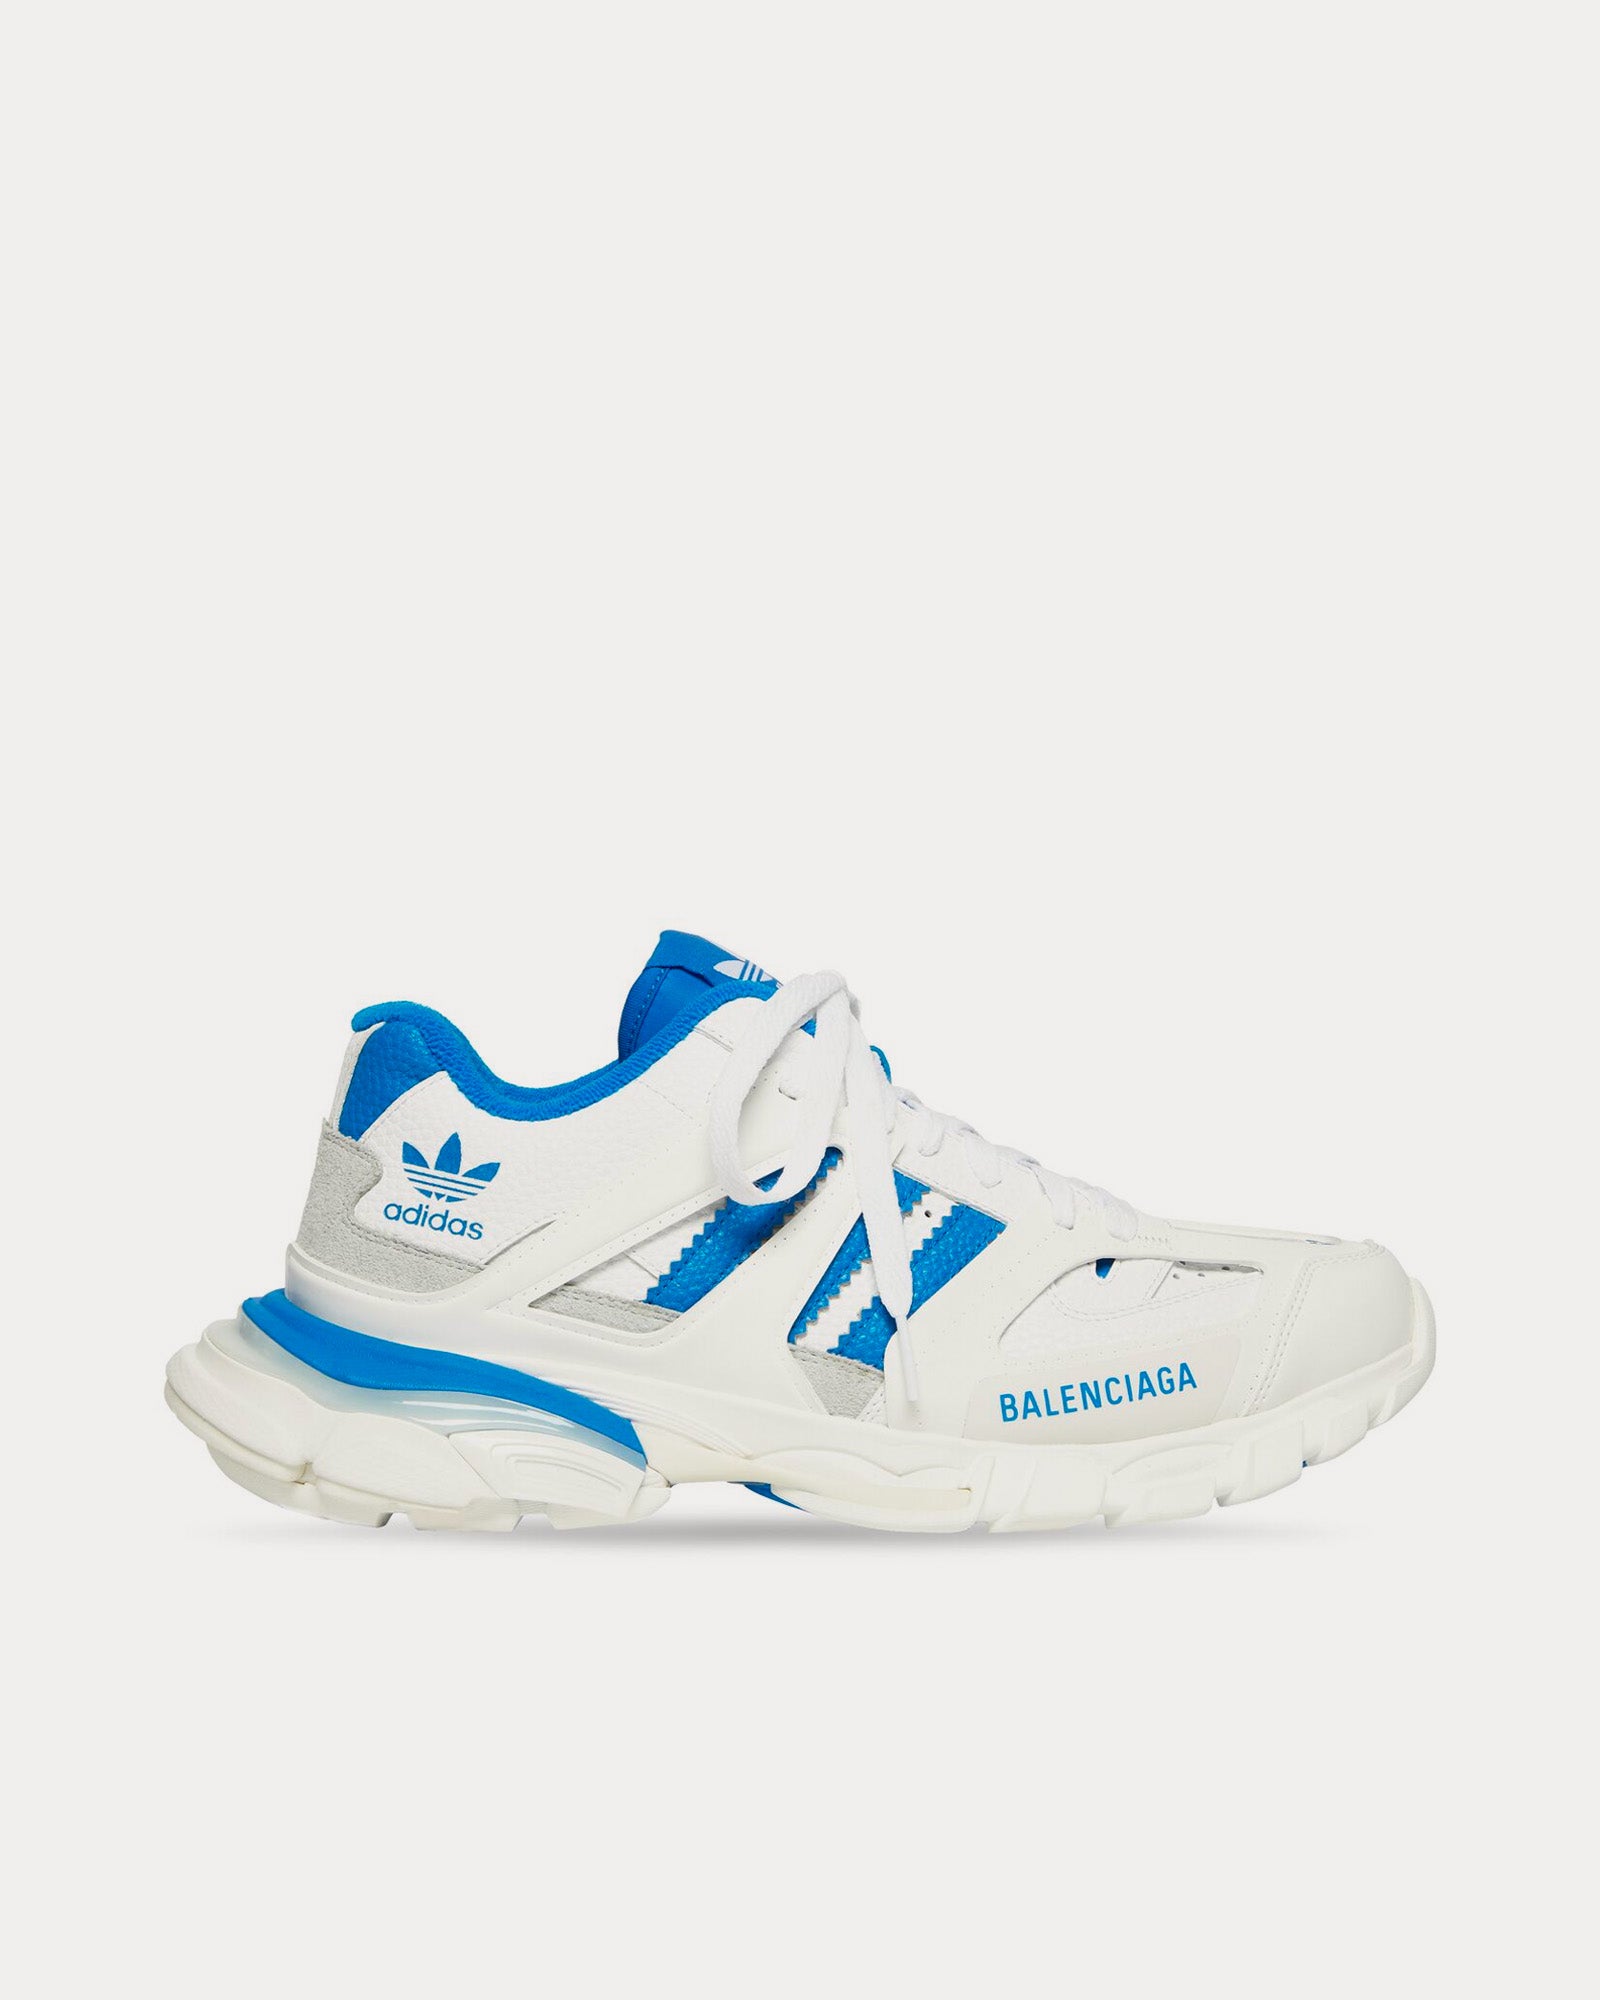 Balenciaga x Adidas - Track Forum White / Blue Low Top Sneakers